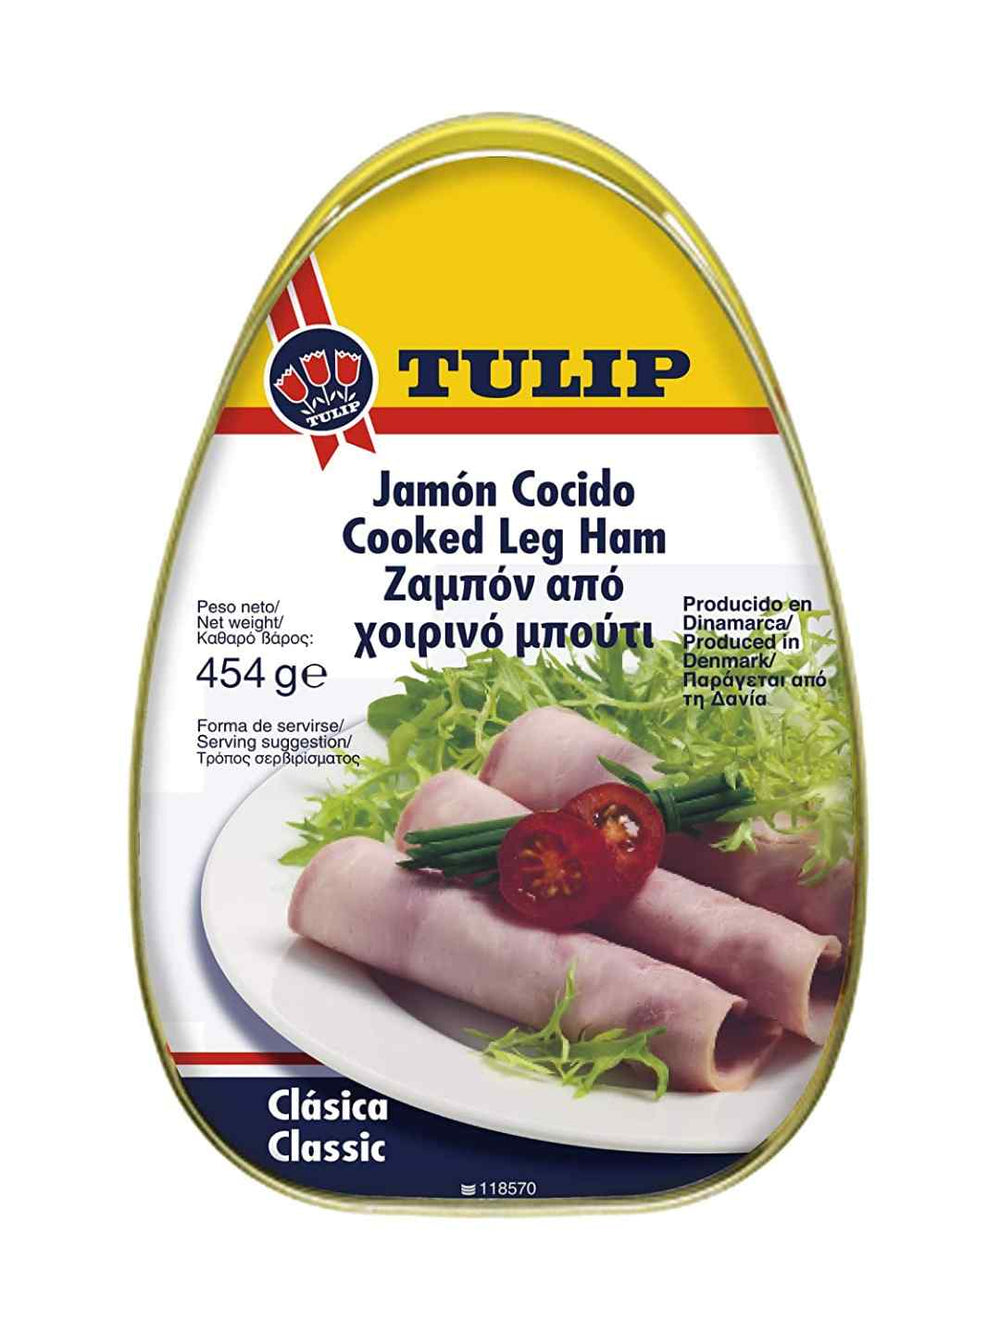 Tulip Jamon Cocido/Pork Leg Ham 340g